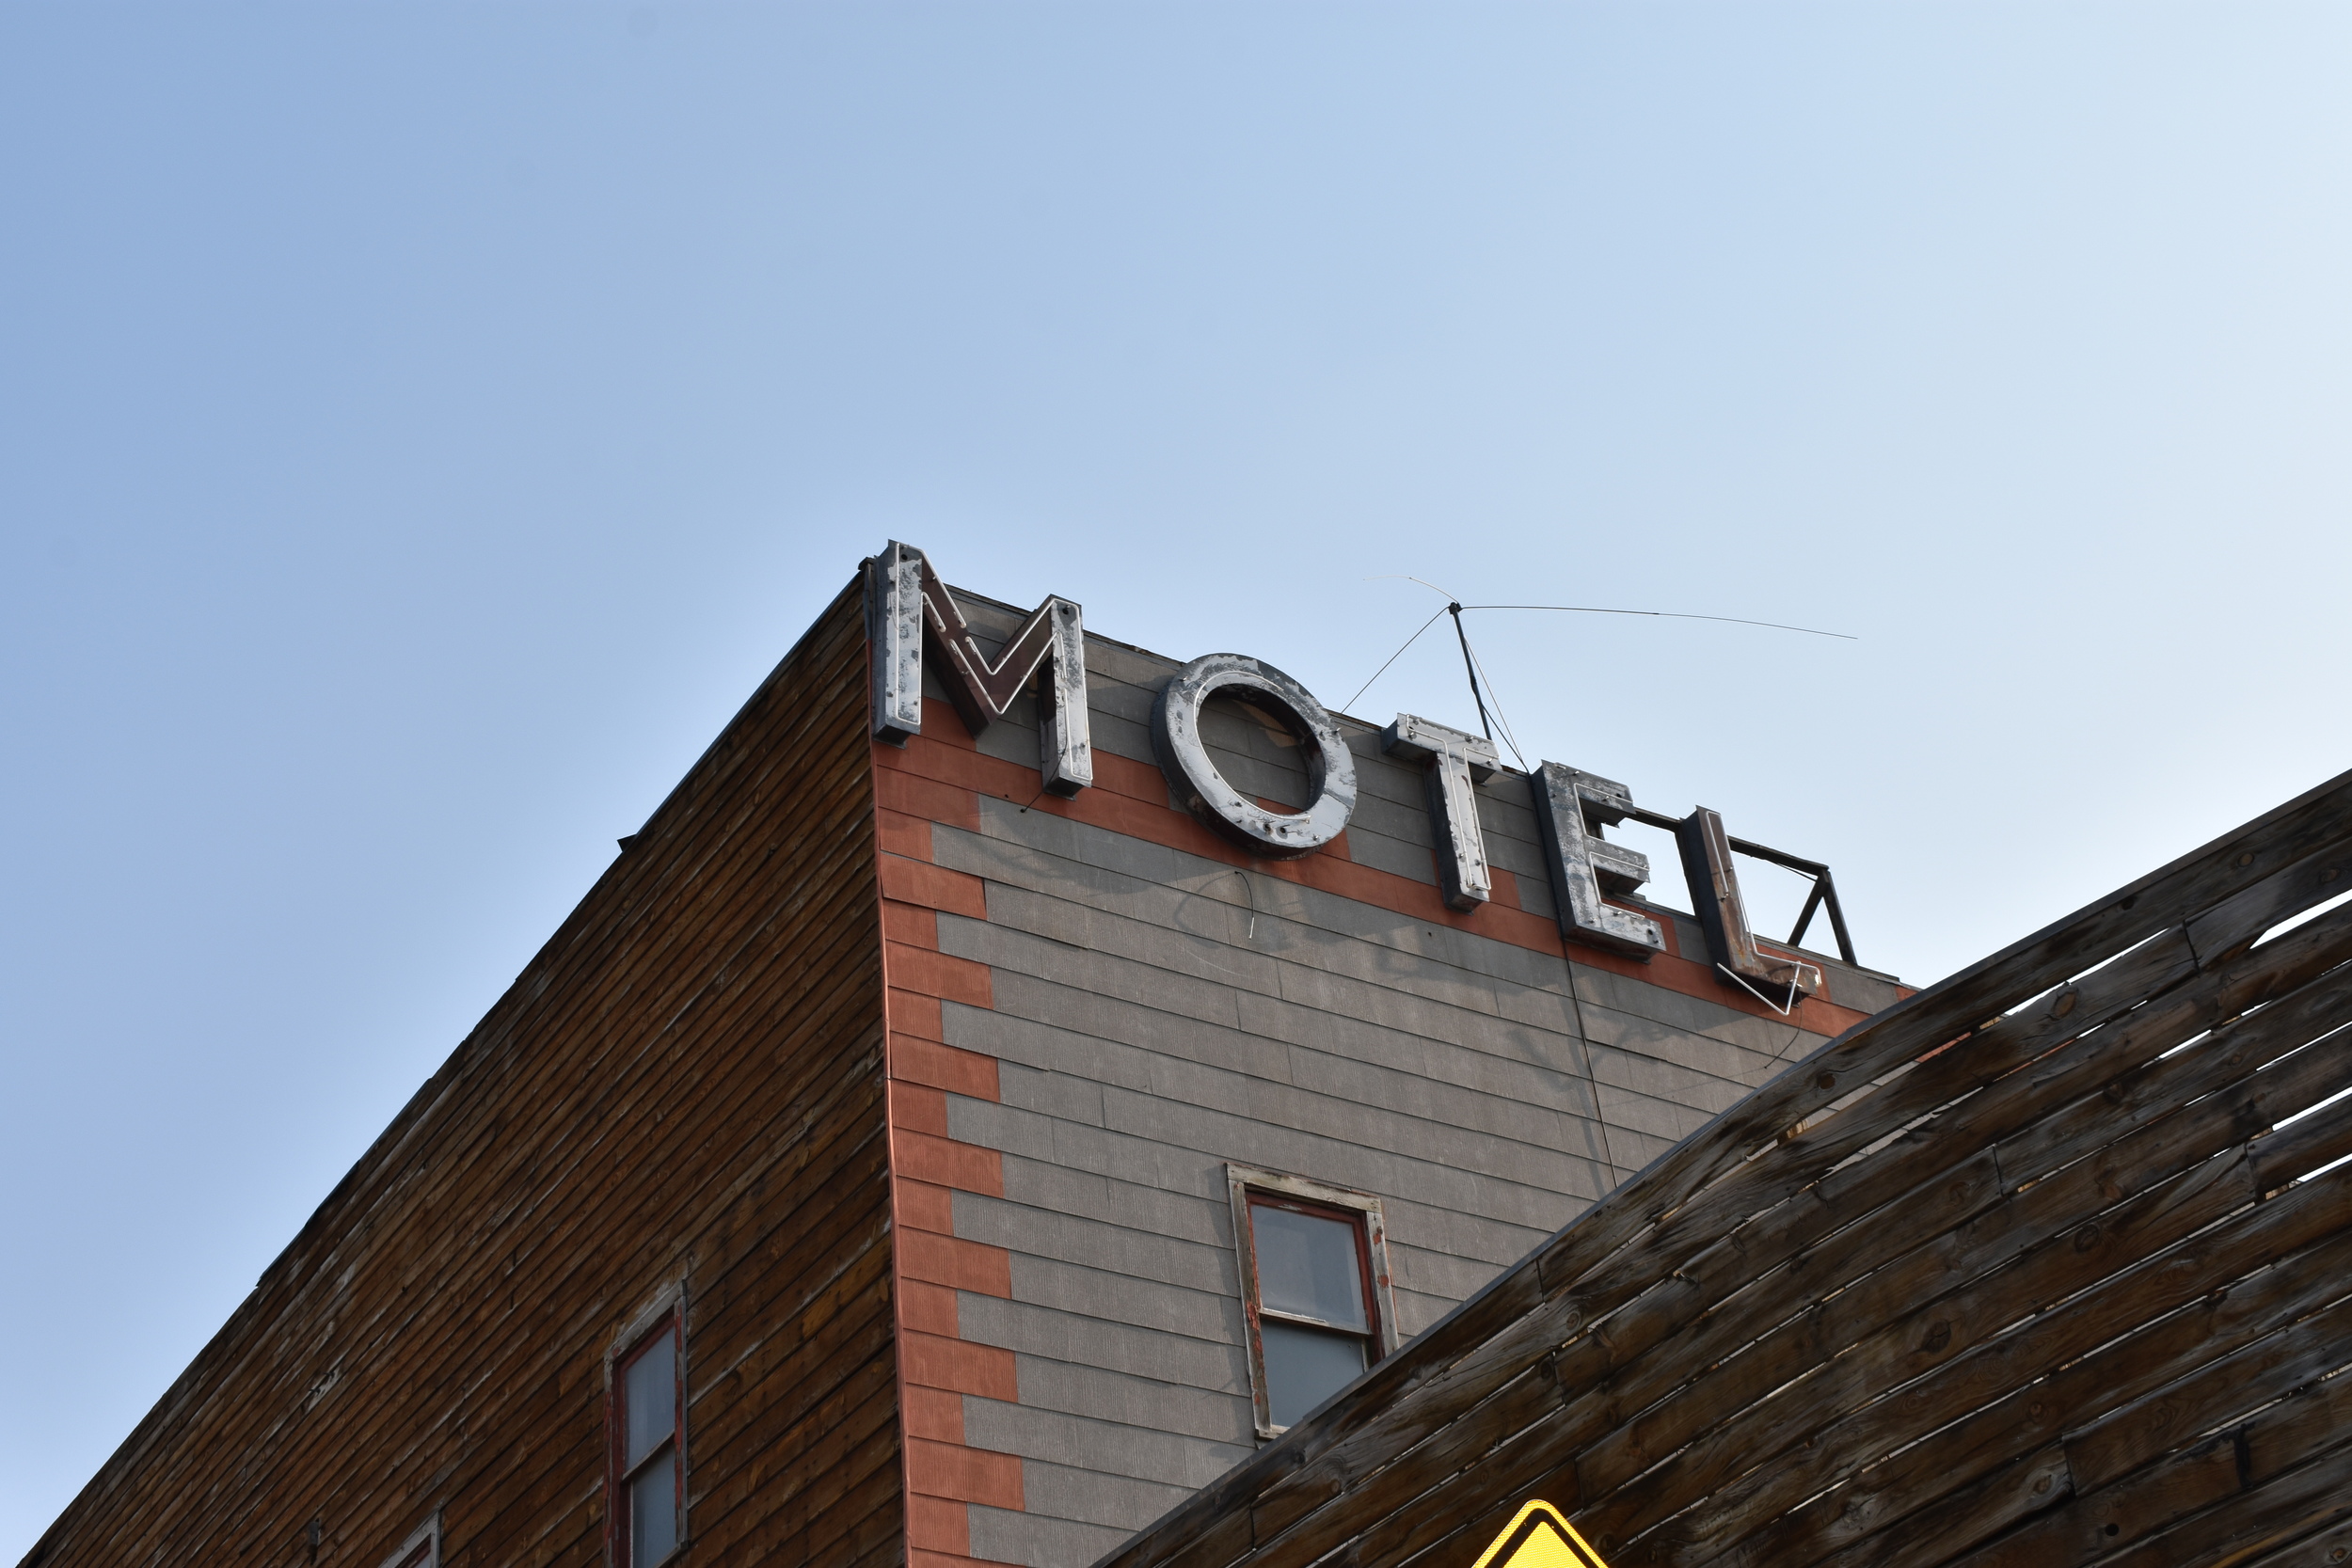 Motel wall mounted sign, Eureka, Nevada